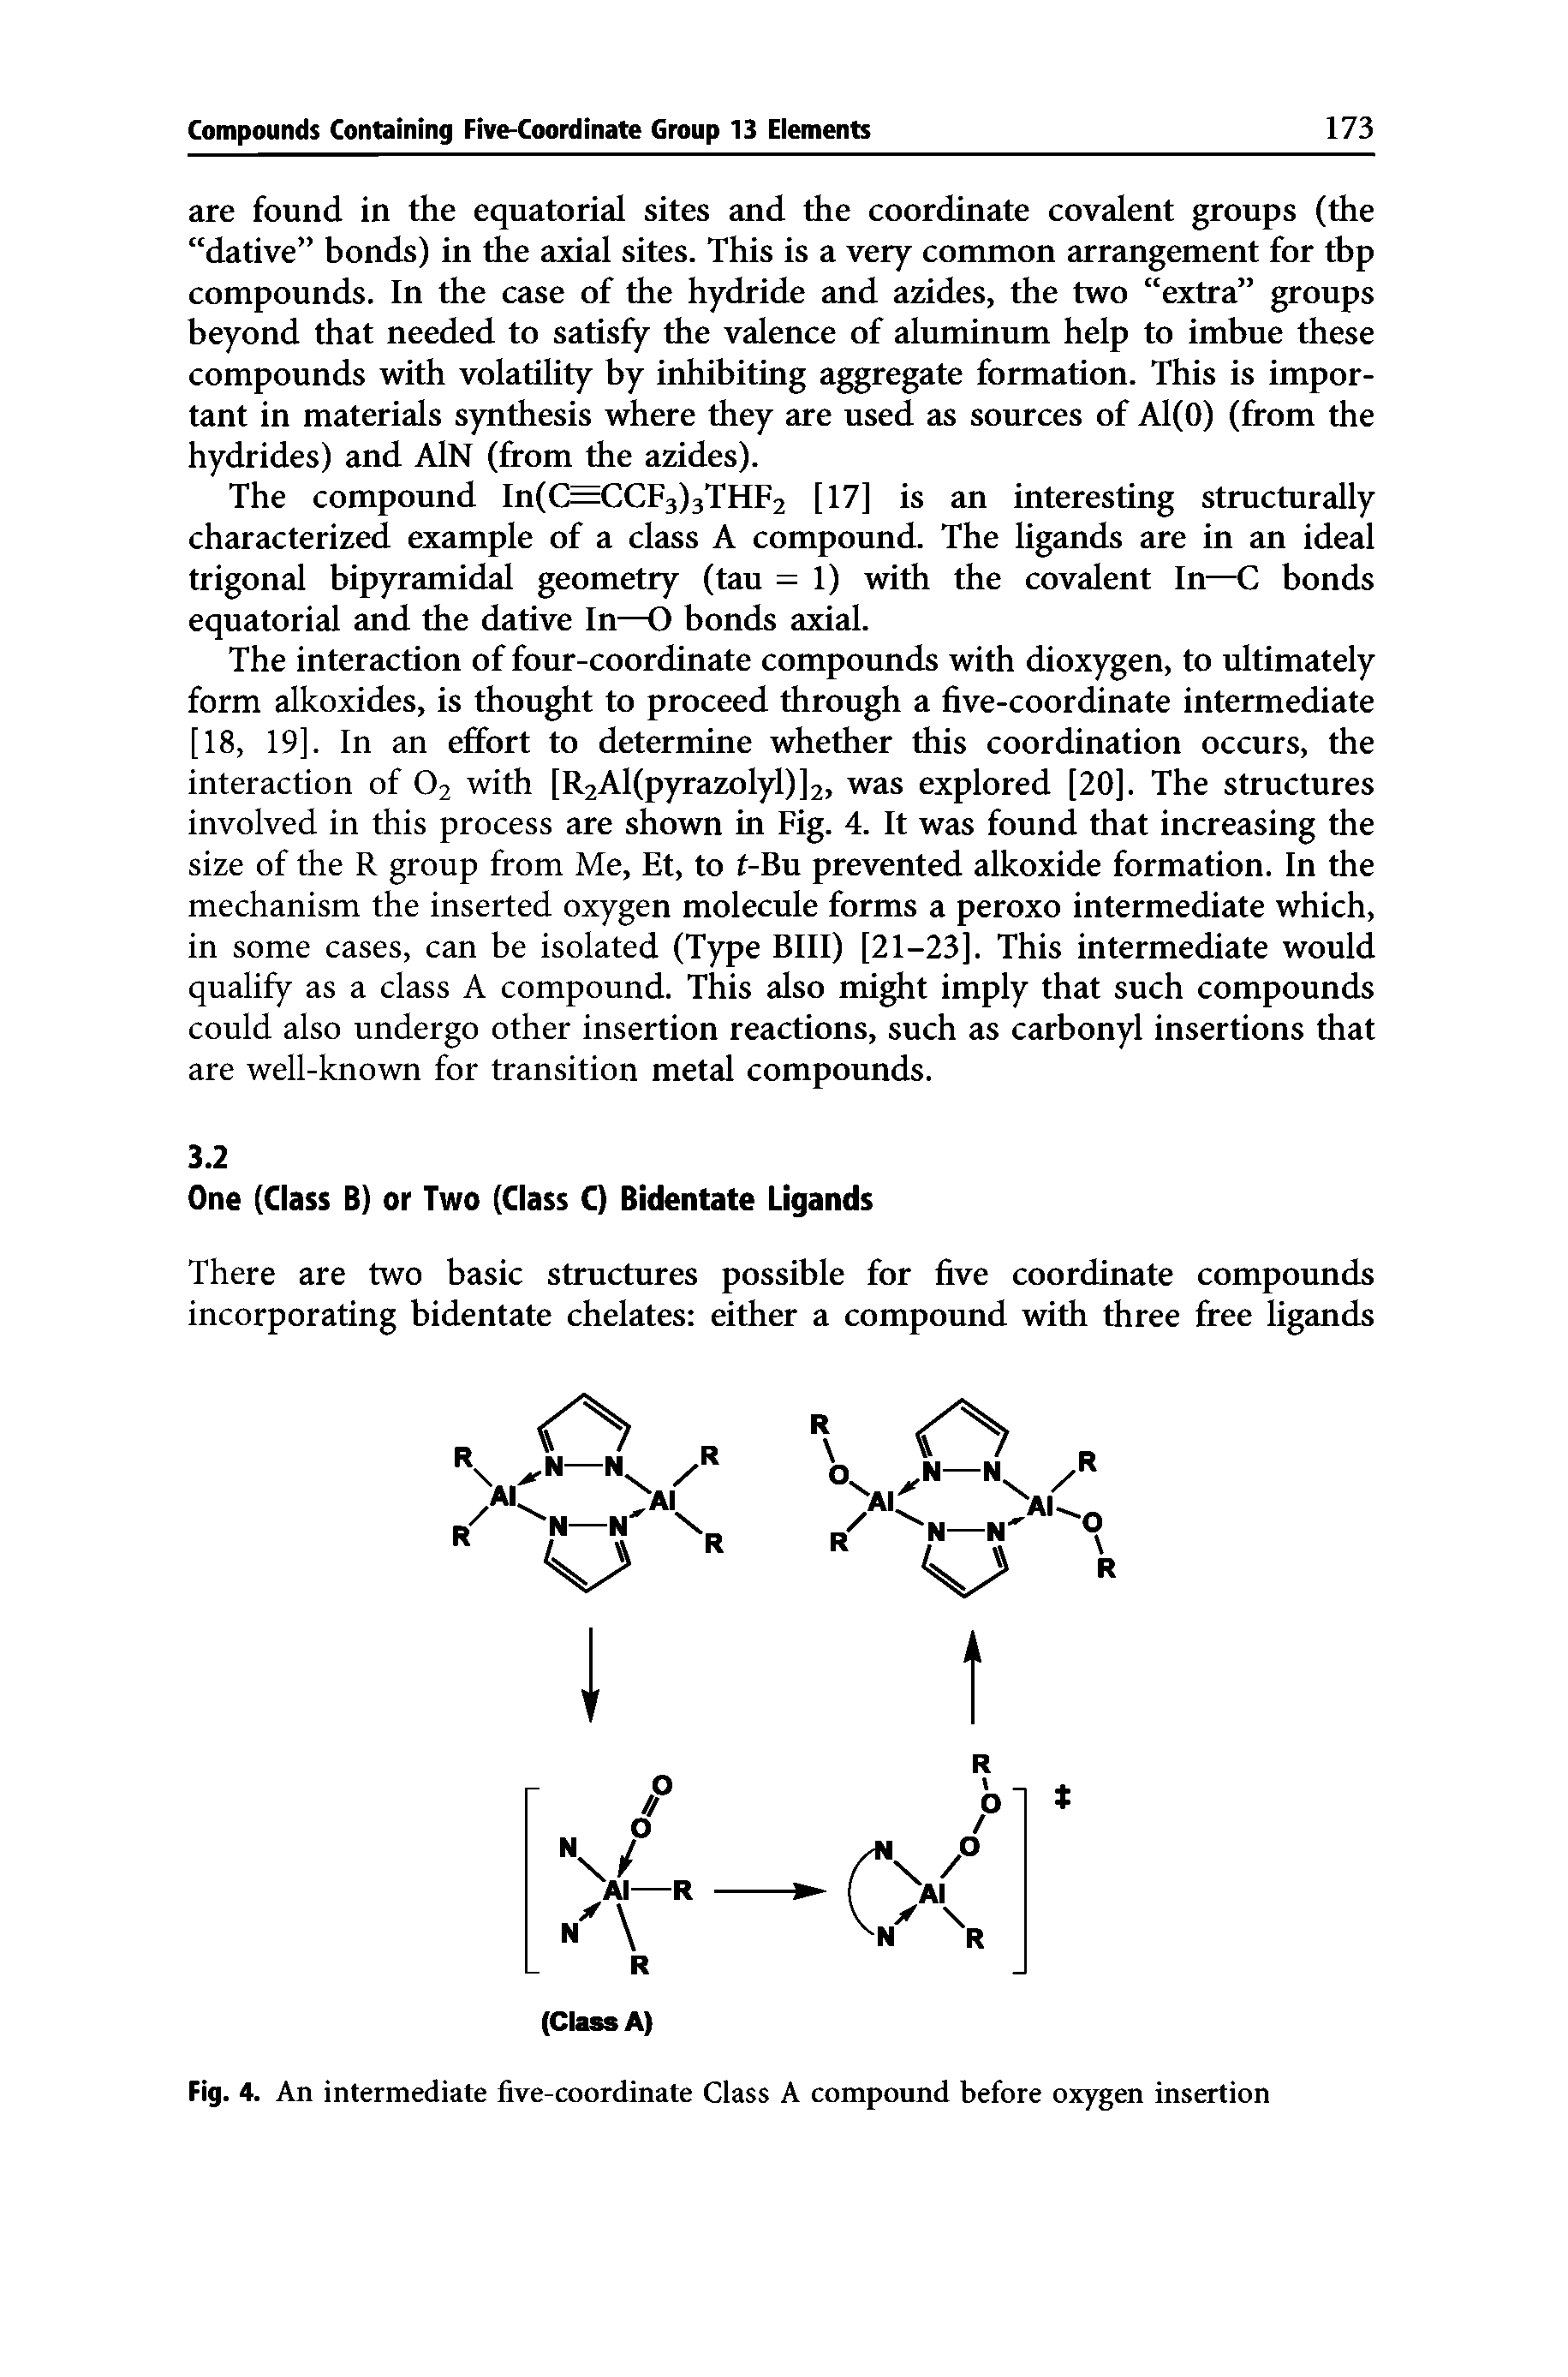 Fig. 4. An intermediate five-coordinate Class A compound before oxygen insertion...